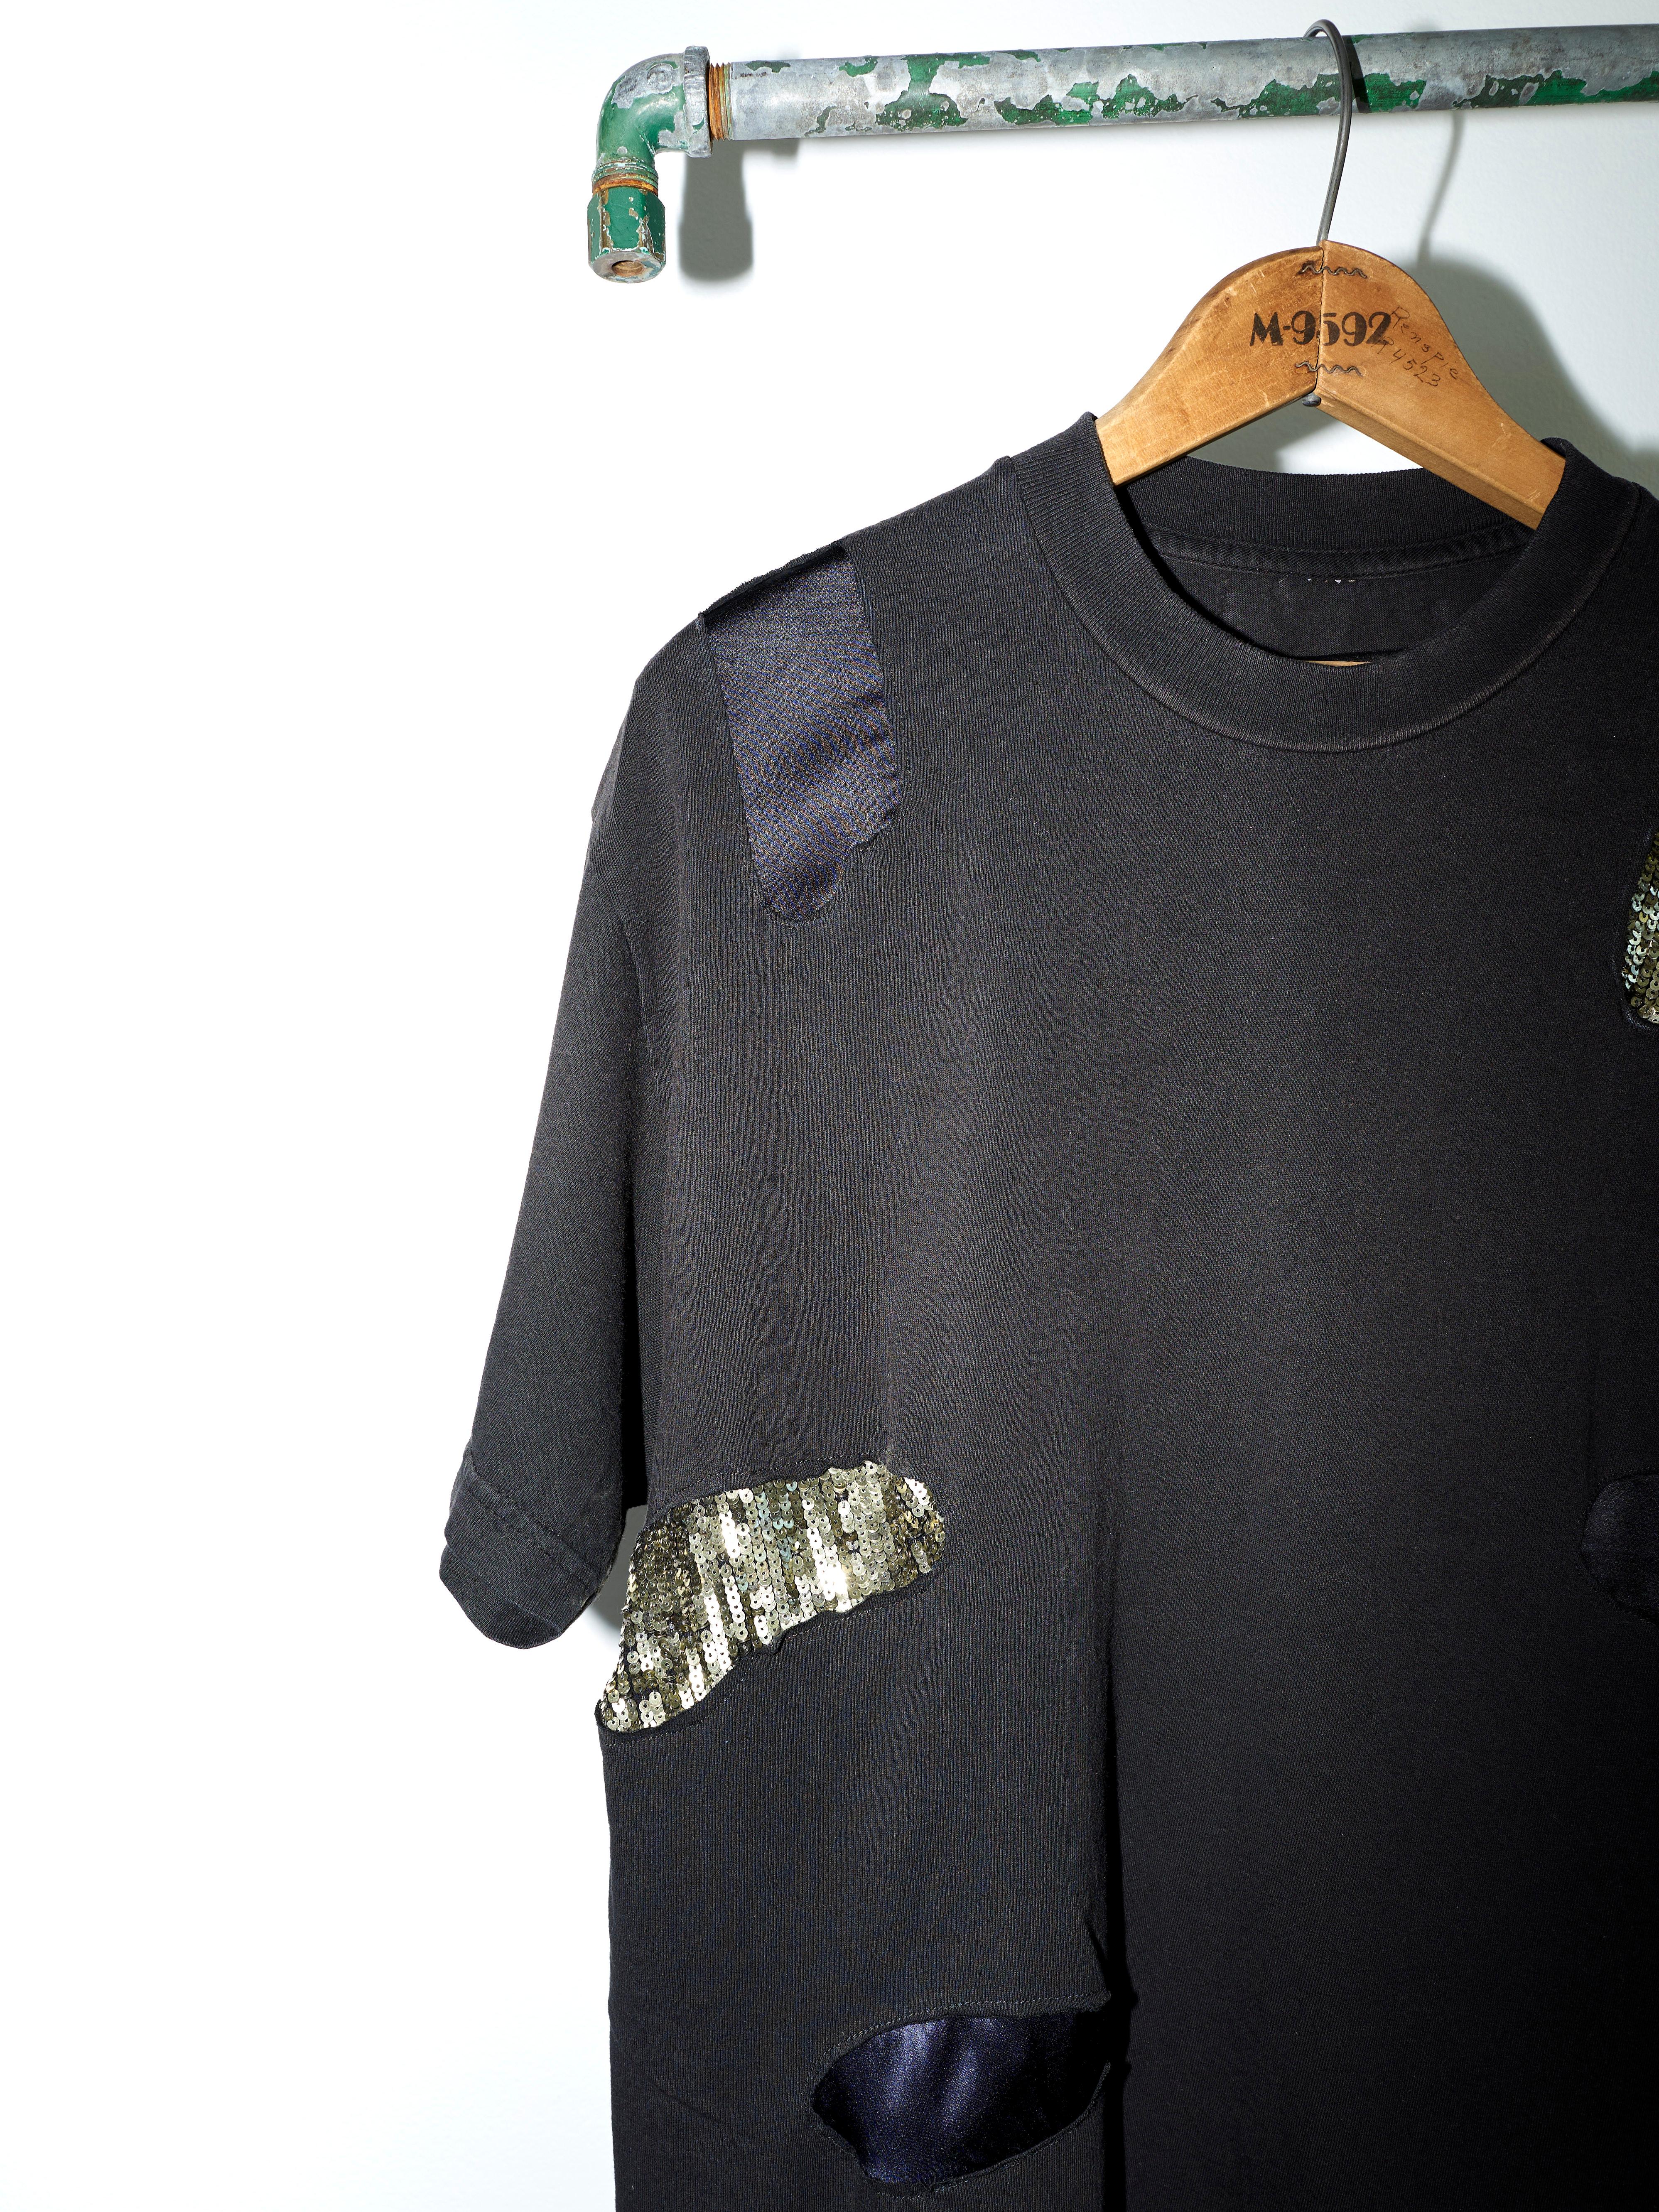 J Dauphin Black T-Shirt Embellished  Patch Work Sequin Silk Body Cotton  1